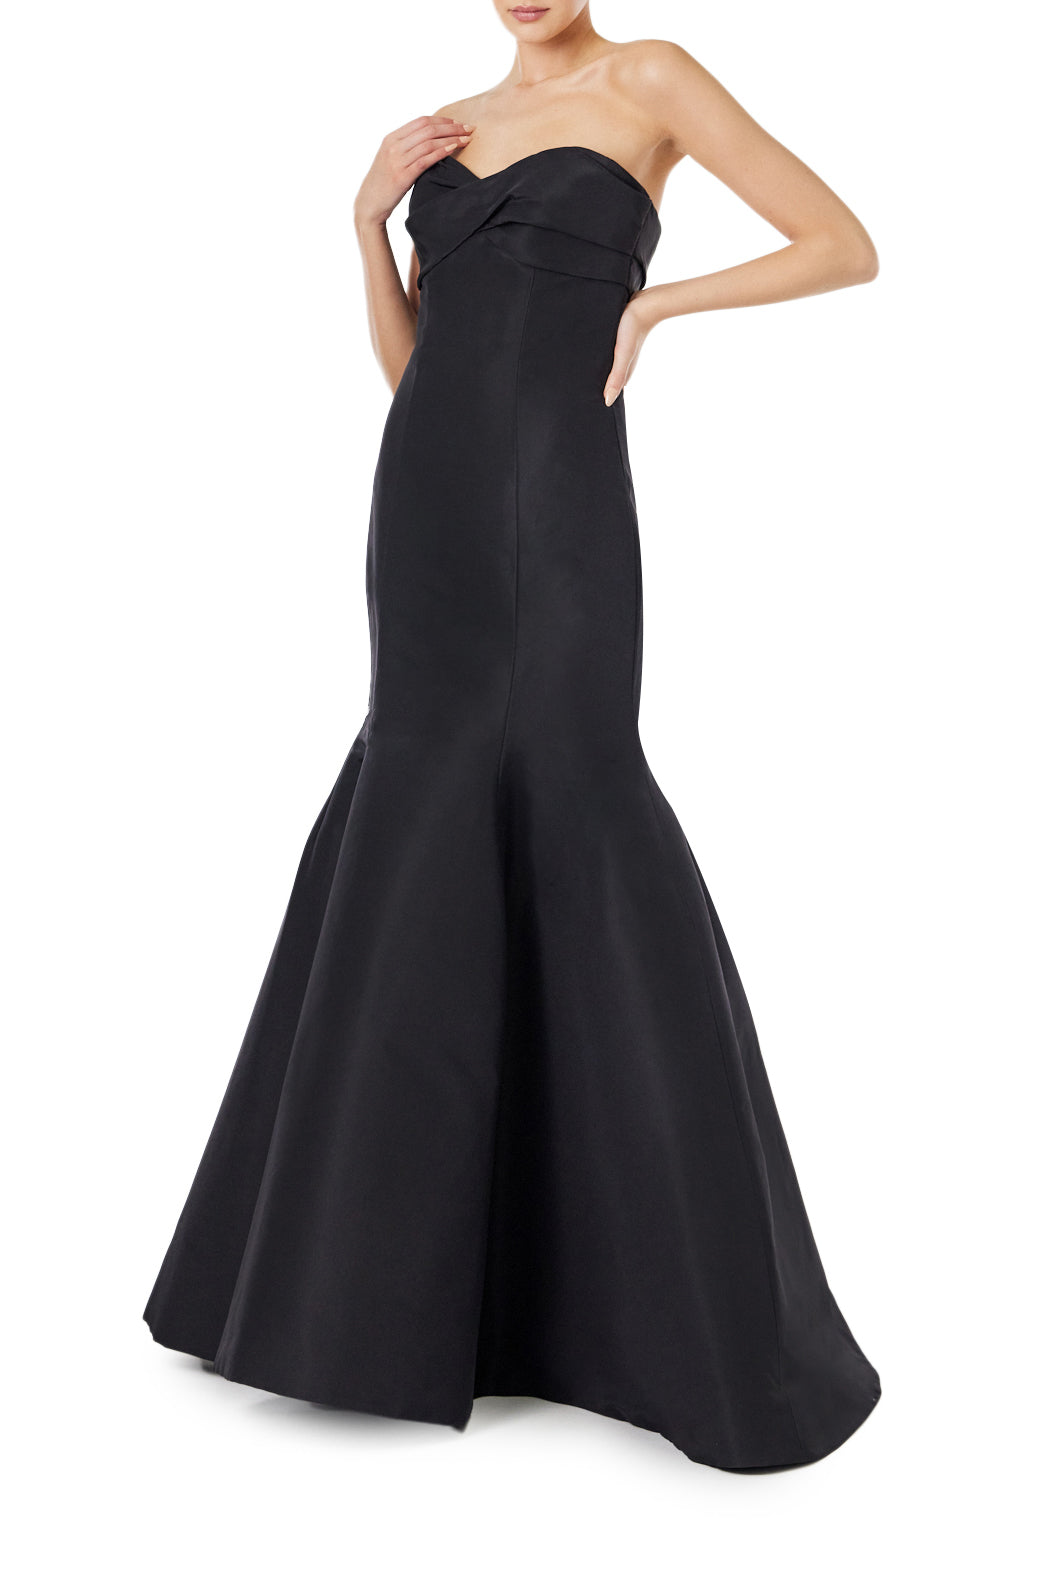 Monique Lhuillier black silk faille strapless gown with mermaid skirt.